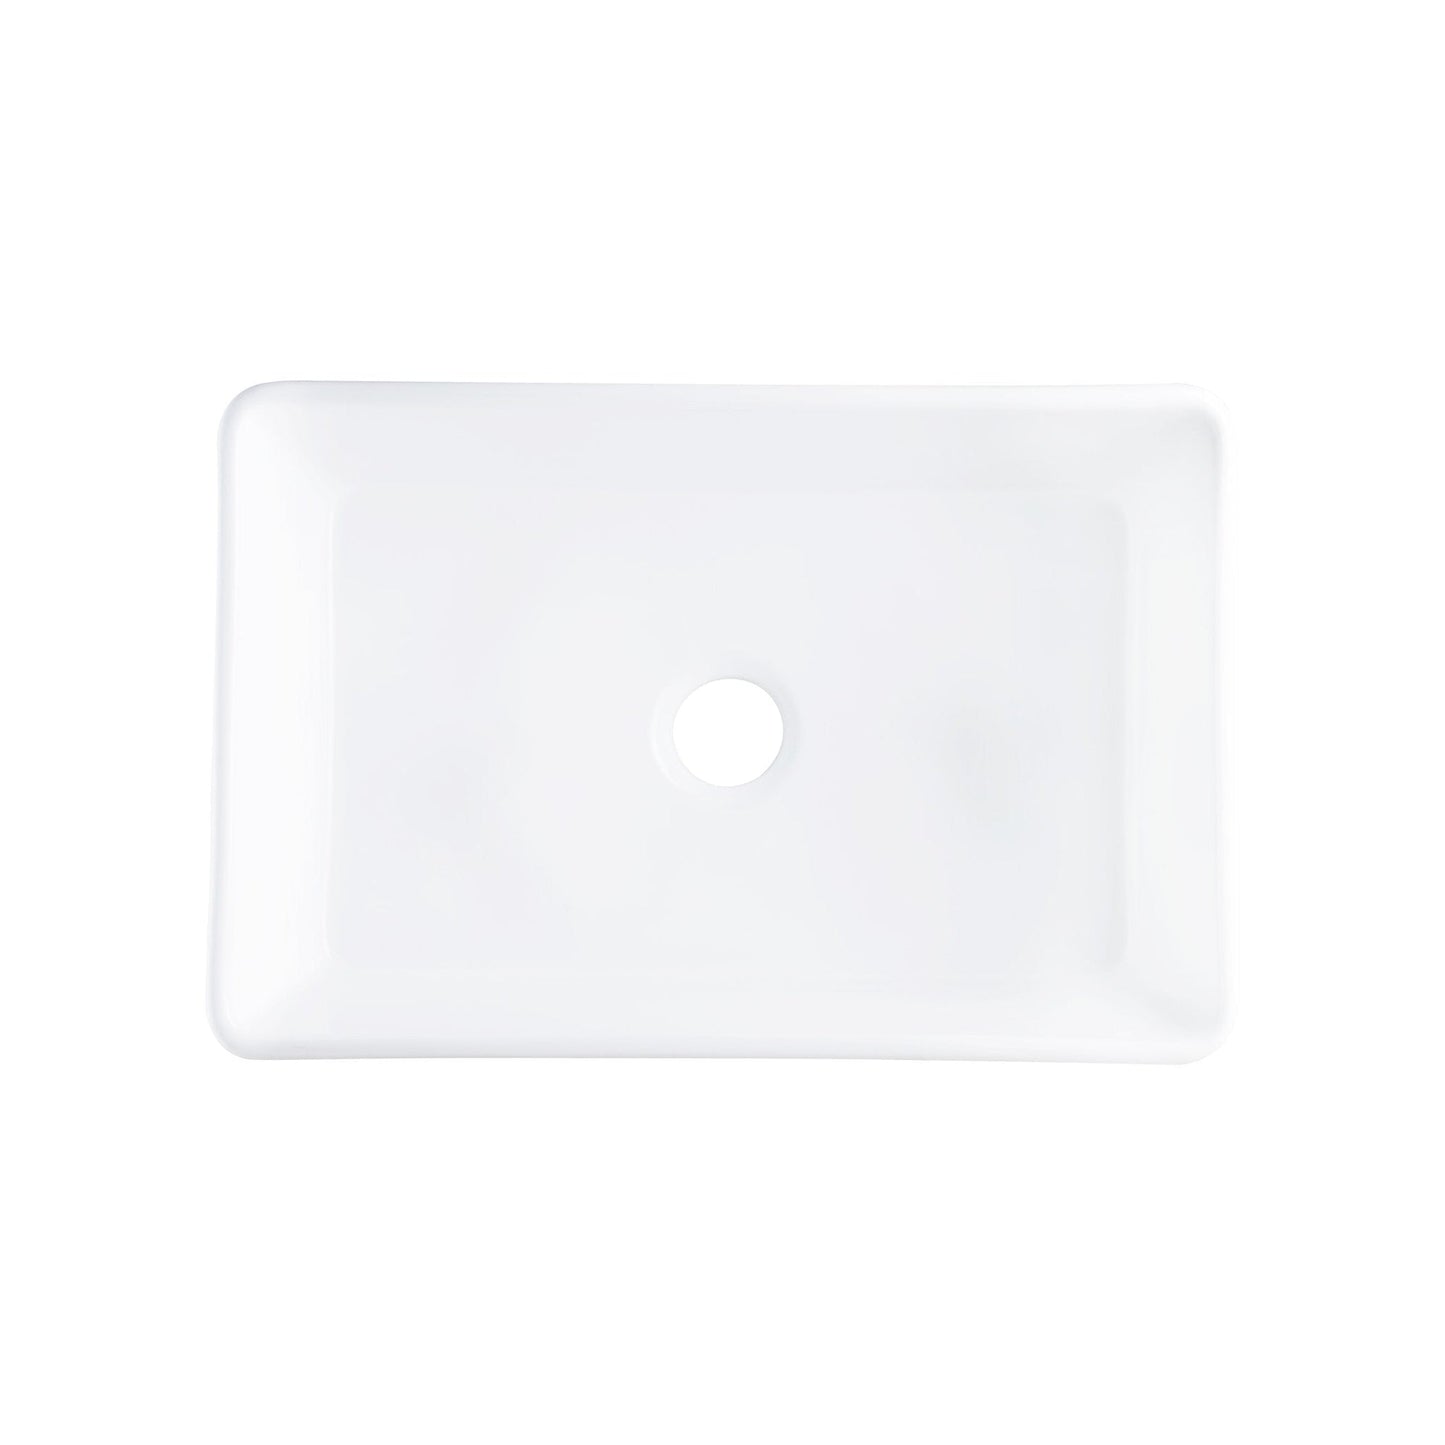 DeerValley DV-1K016 19" x 30" x 10" White Ceramic Farmhouse Single Kitchen Sink With Apron Front Designed